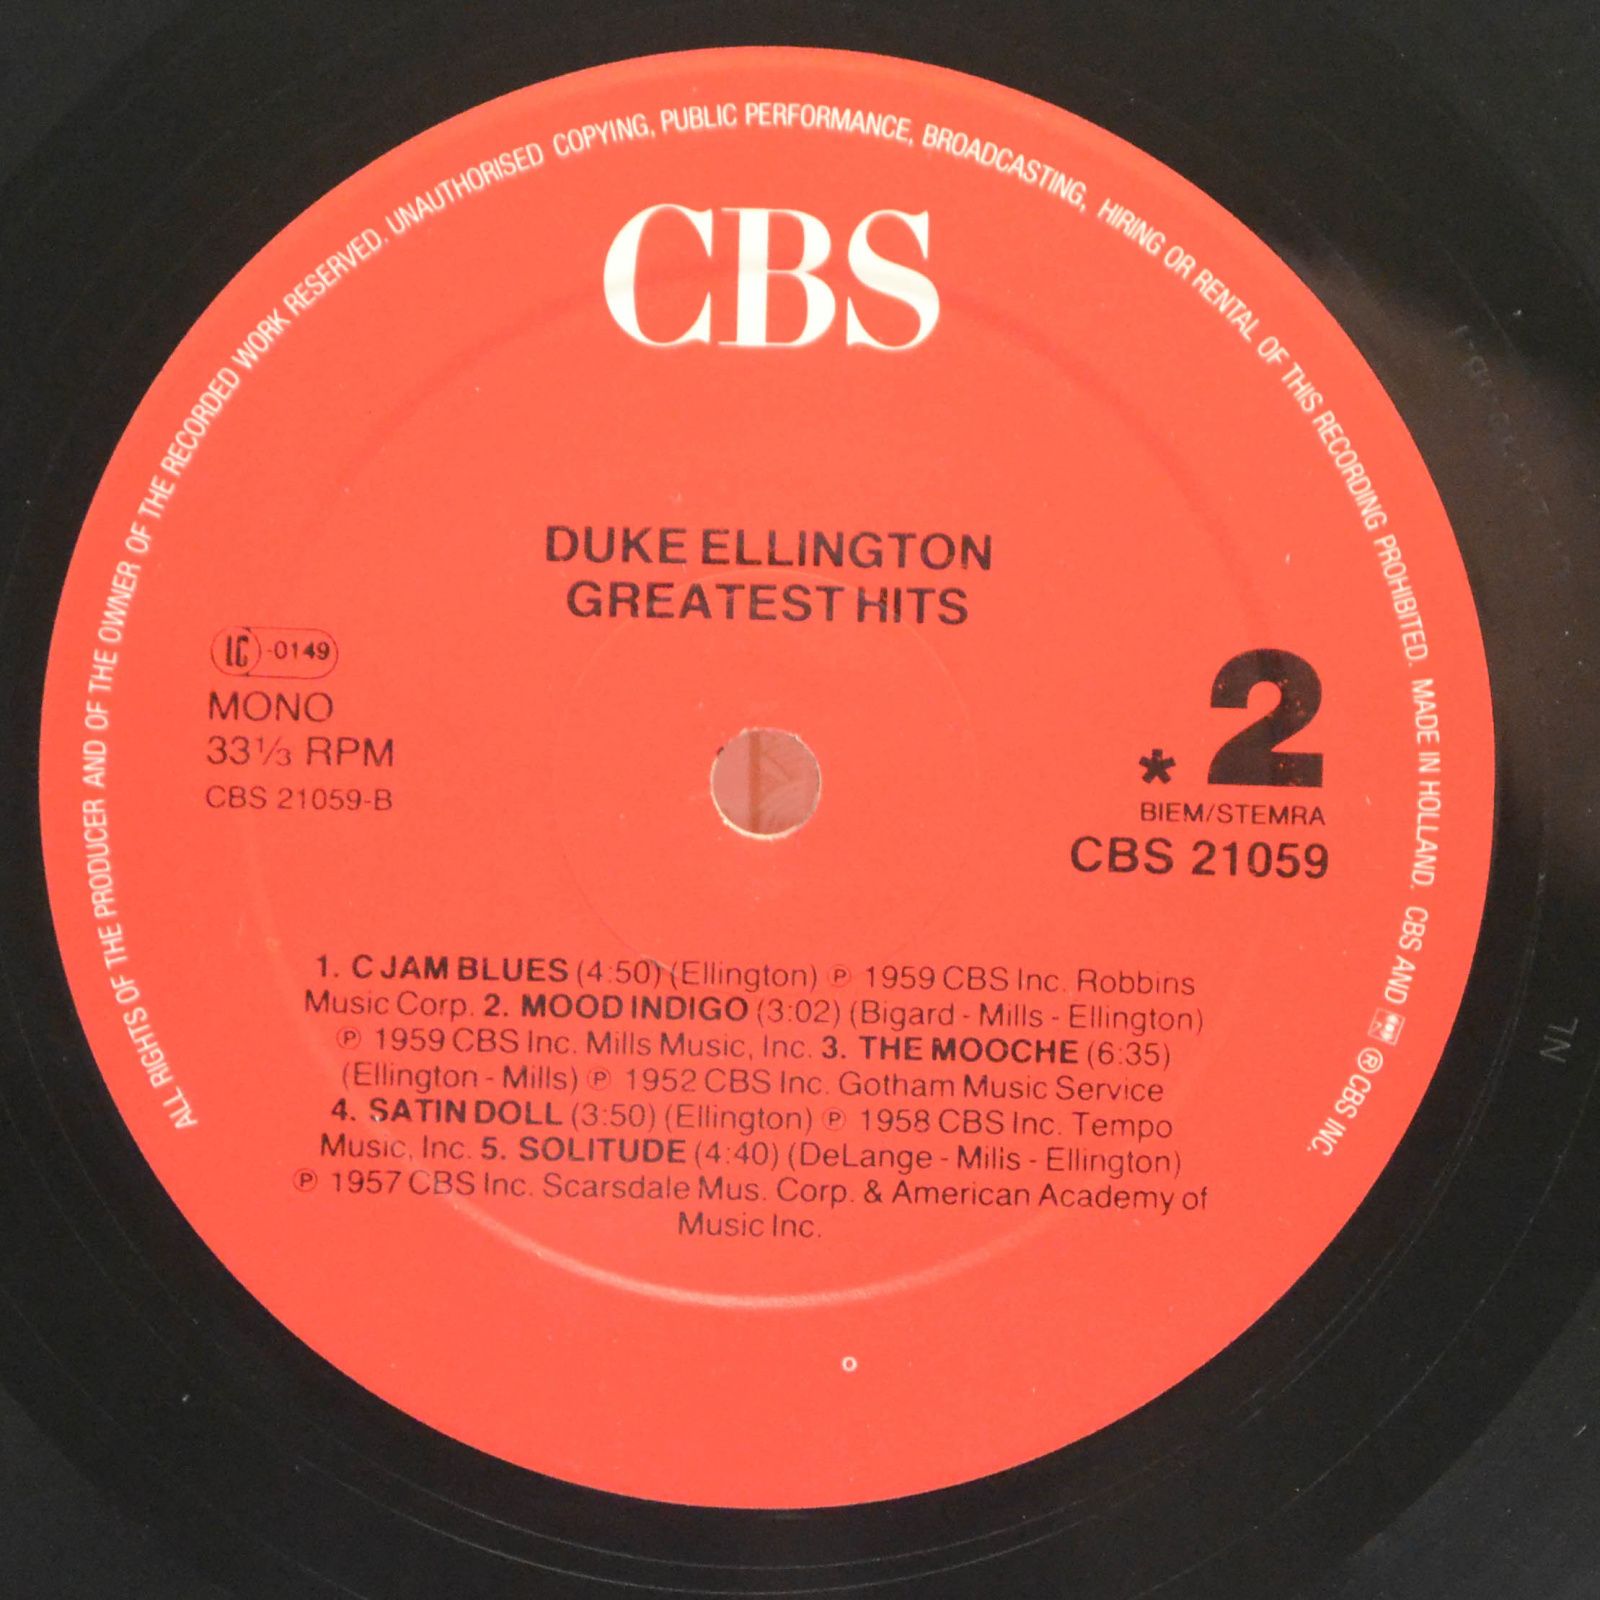 Duke Ellington — Greatest Hits, 1983